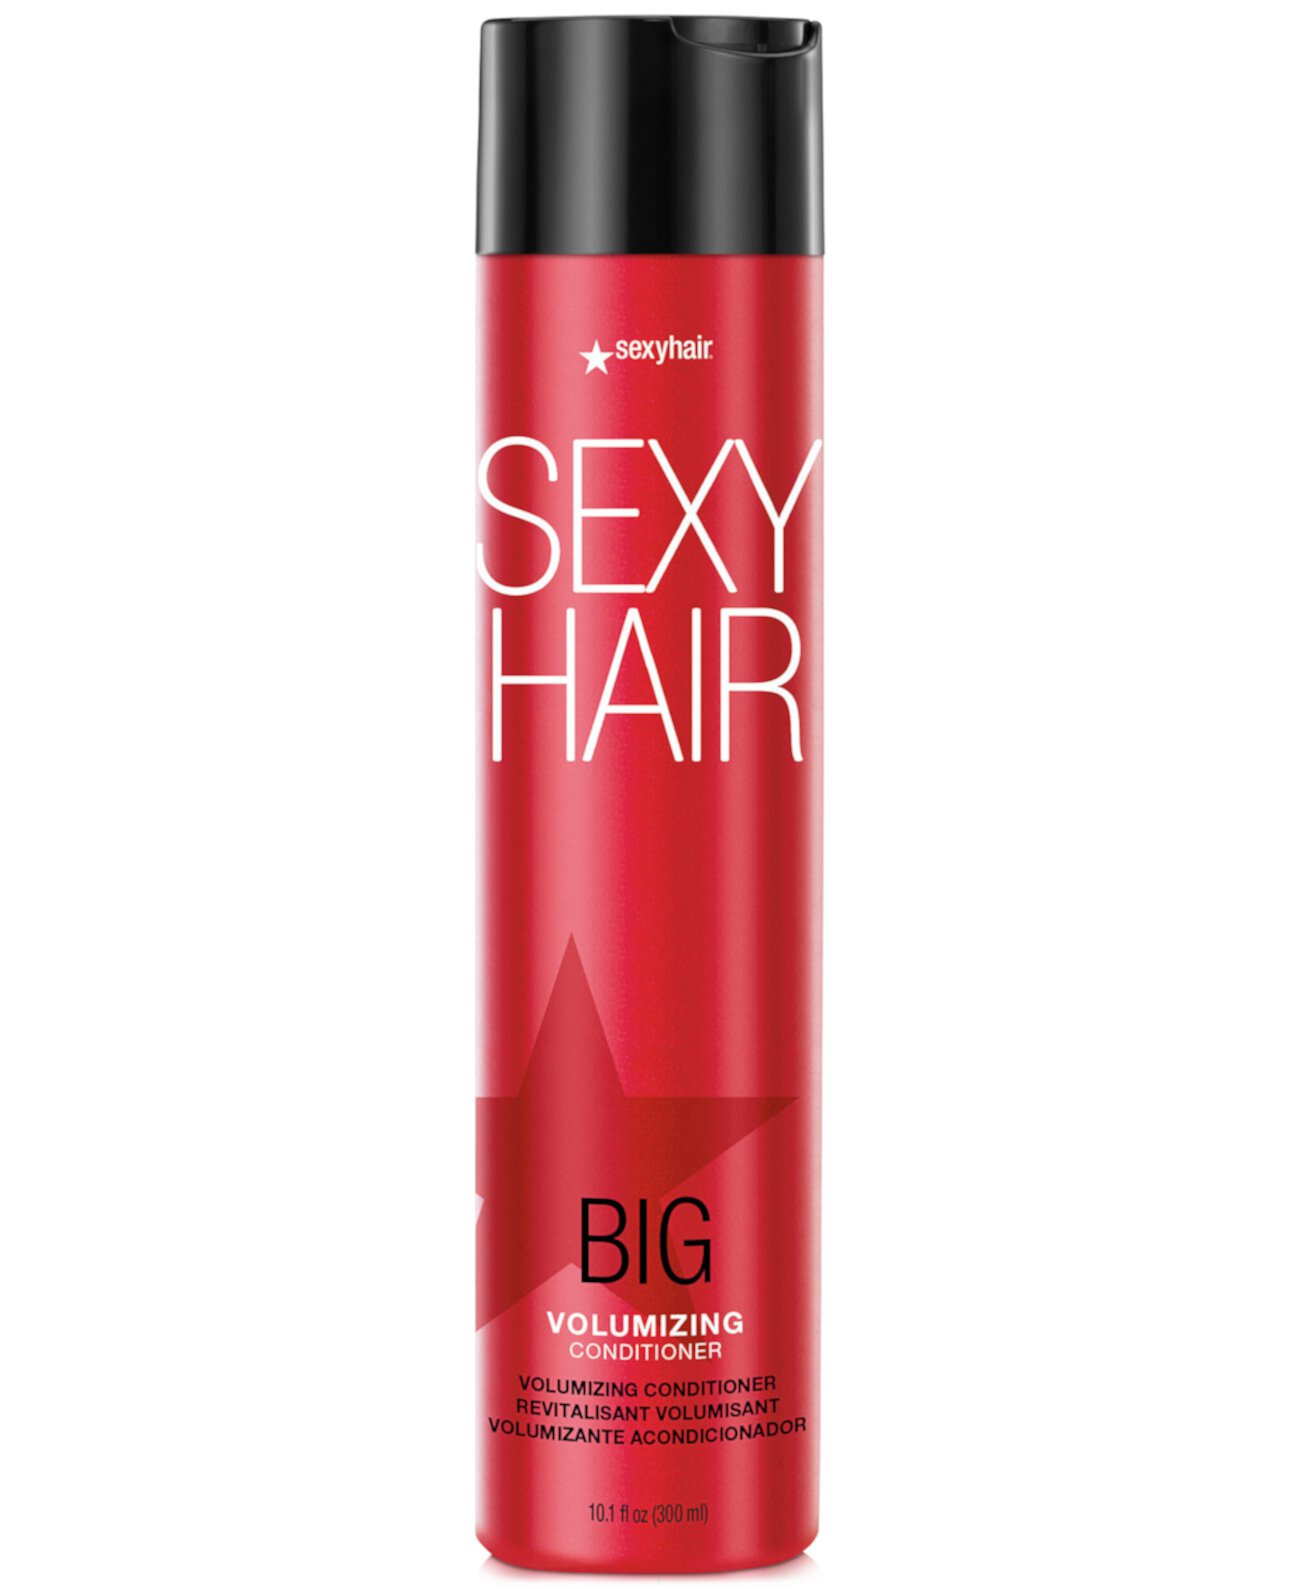 Объемный кондиционер для волос Big Sexy Hair, 10,1 унции, от PUREBEAUTY Salon & Spa Sexy Hair